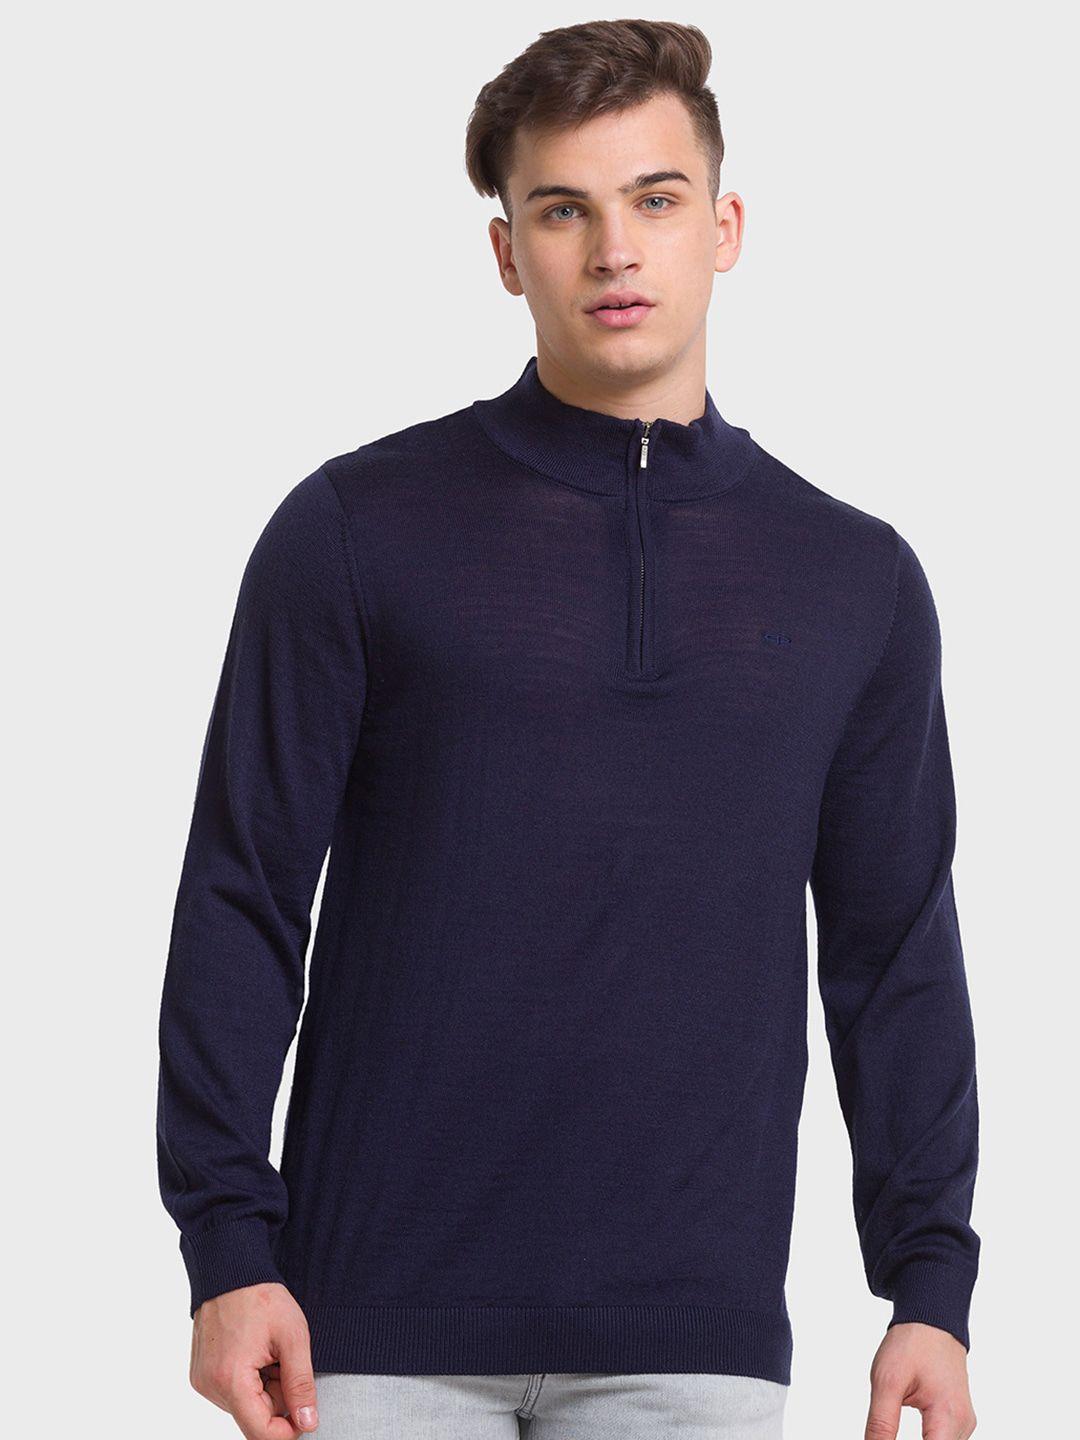 colorplus-men-mock-collar-wool-pullover